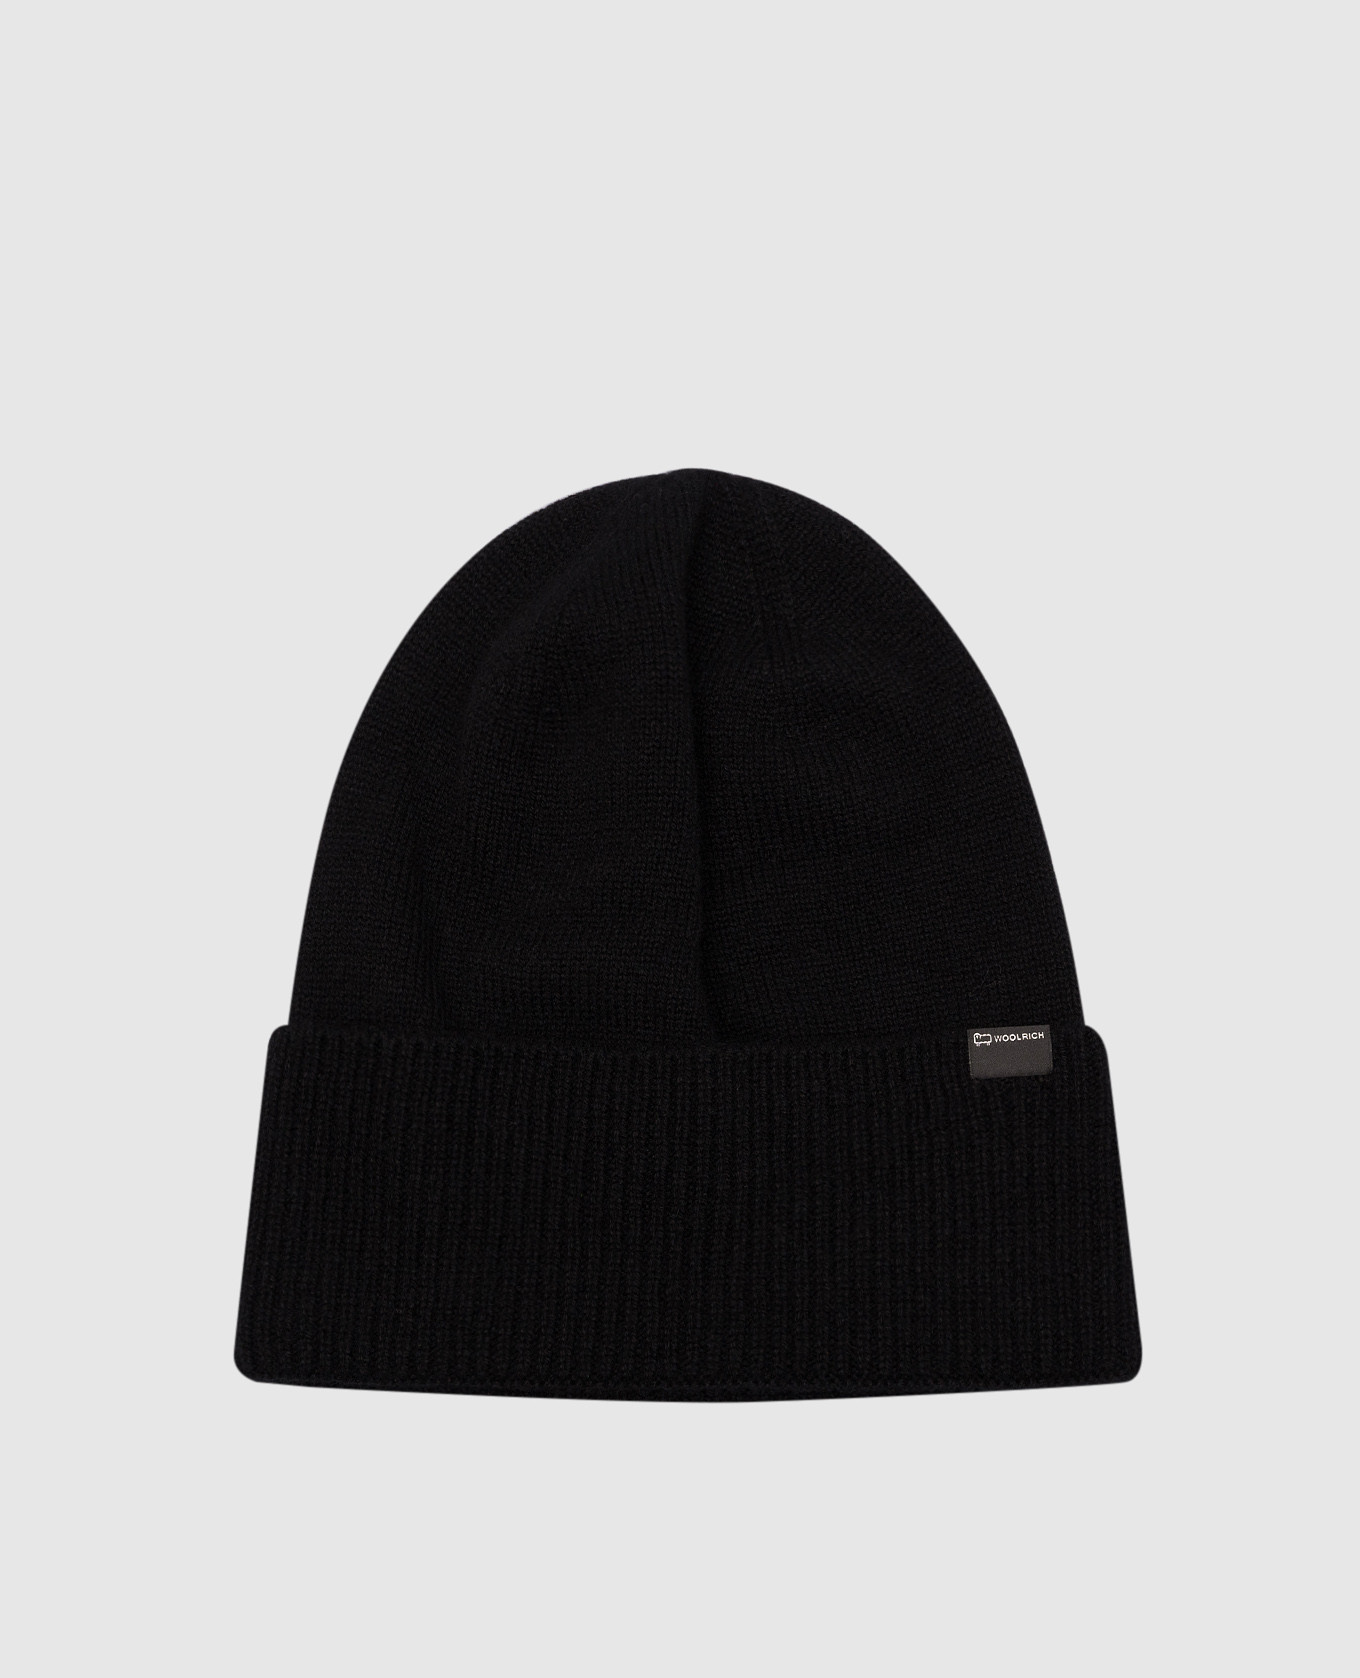 Black cashmere hat